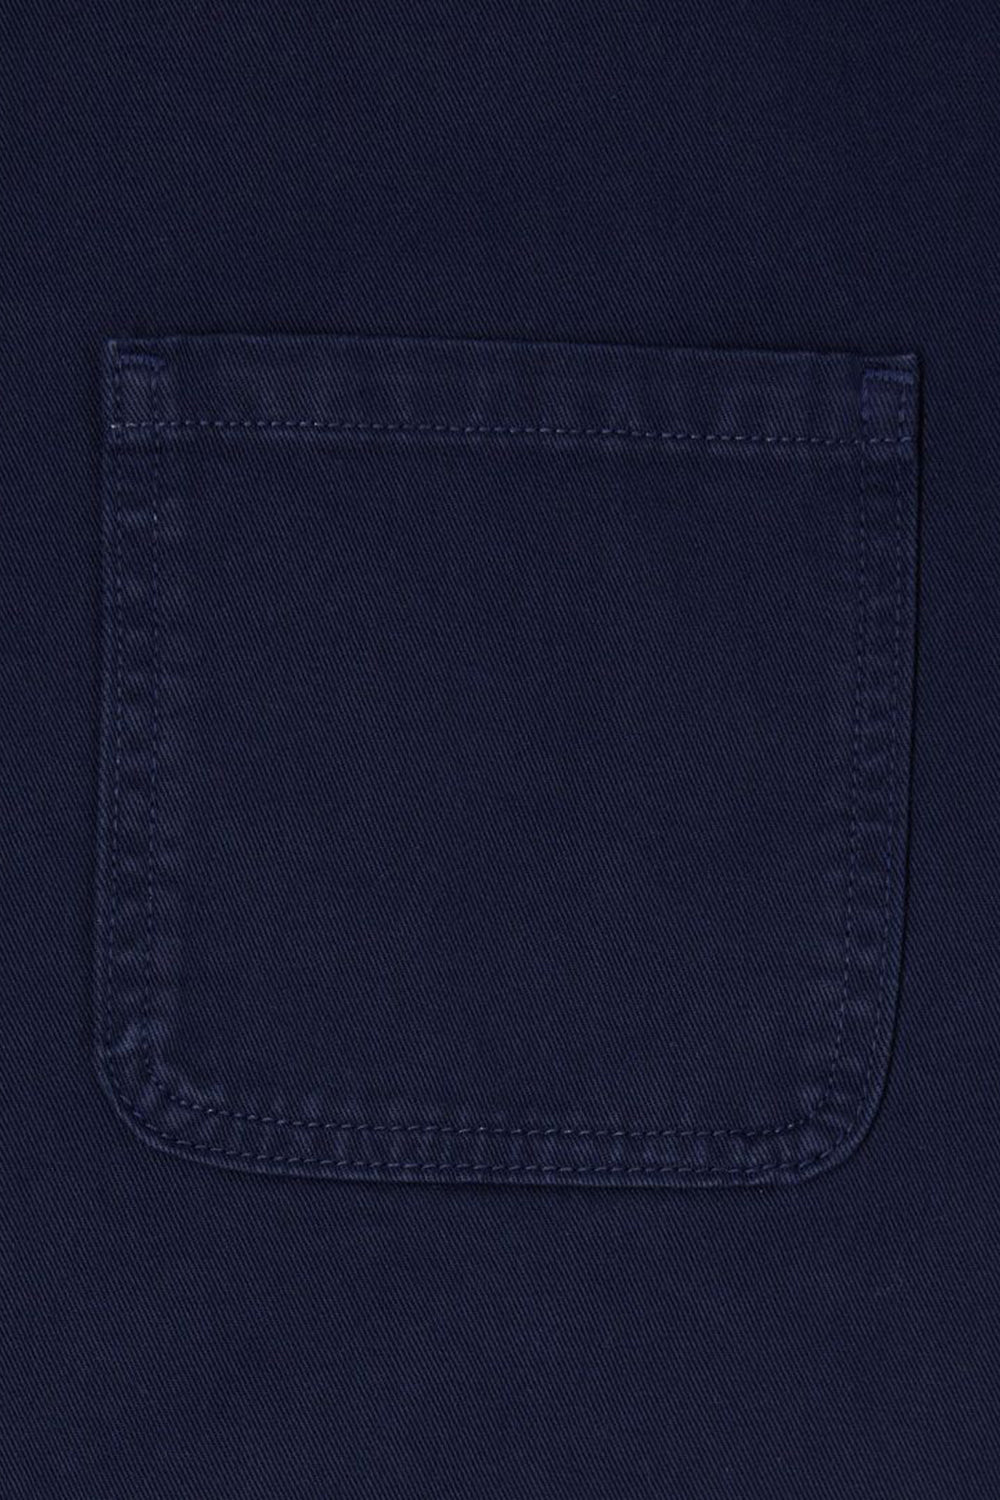 Edwin Trembley Jacket PFD Twill (Maritime Blue)